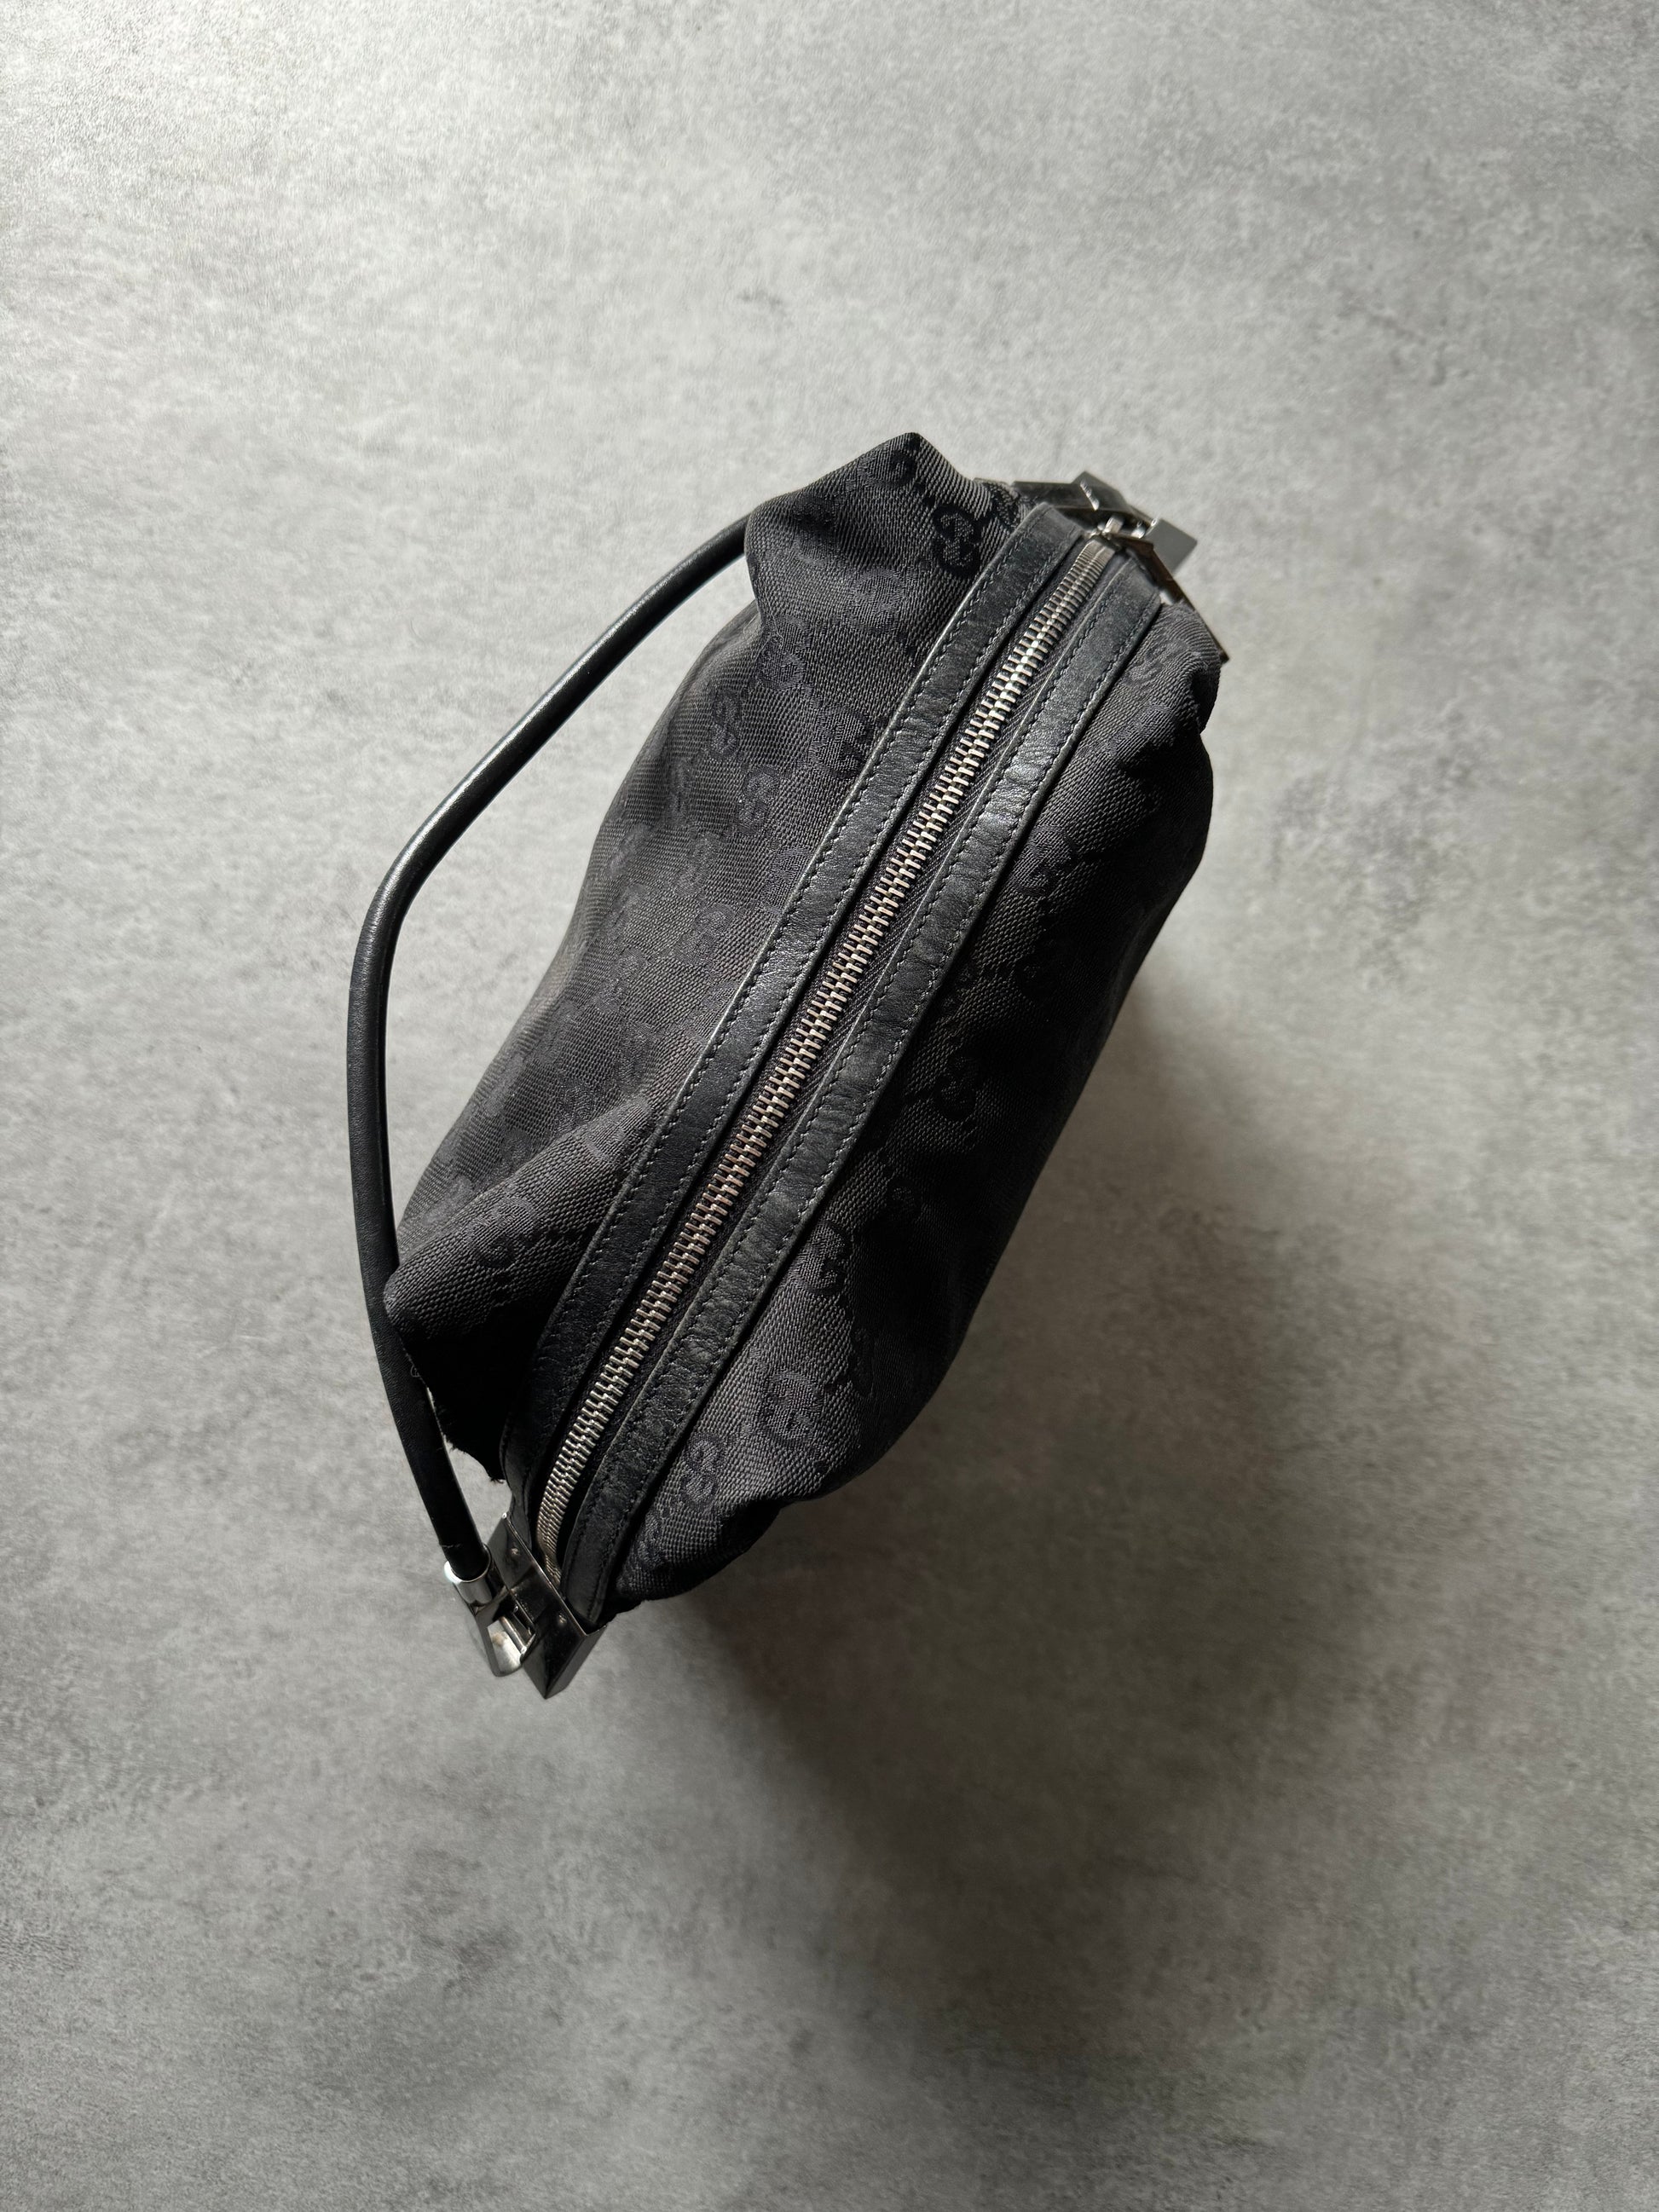 FW2002 Gucci Black Monogrammed Black Bag by Tom Ford (OS) - 9